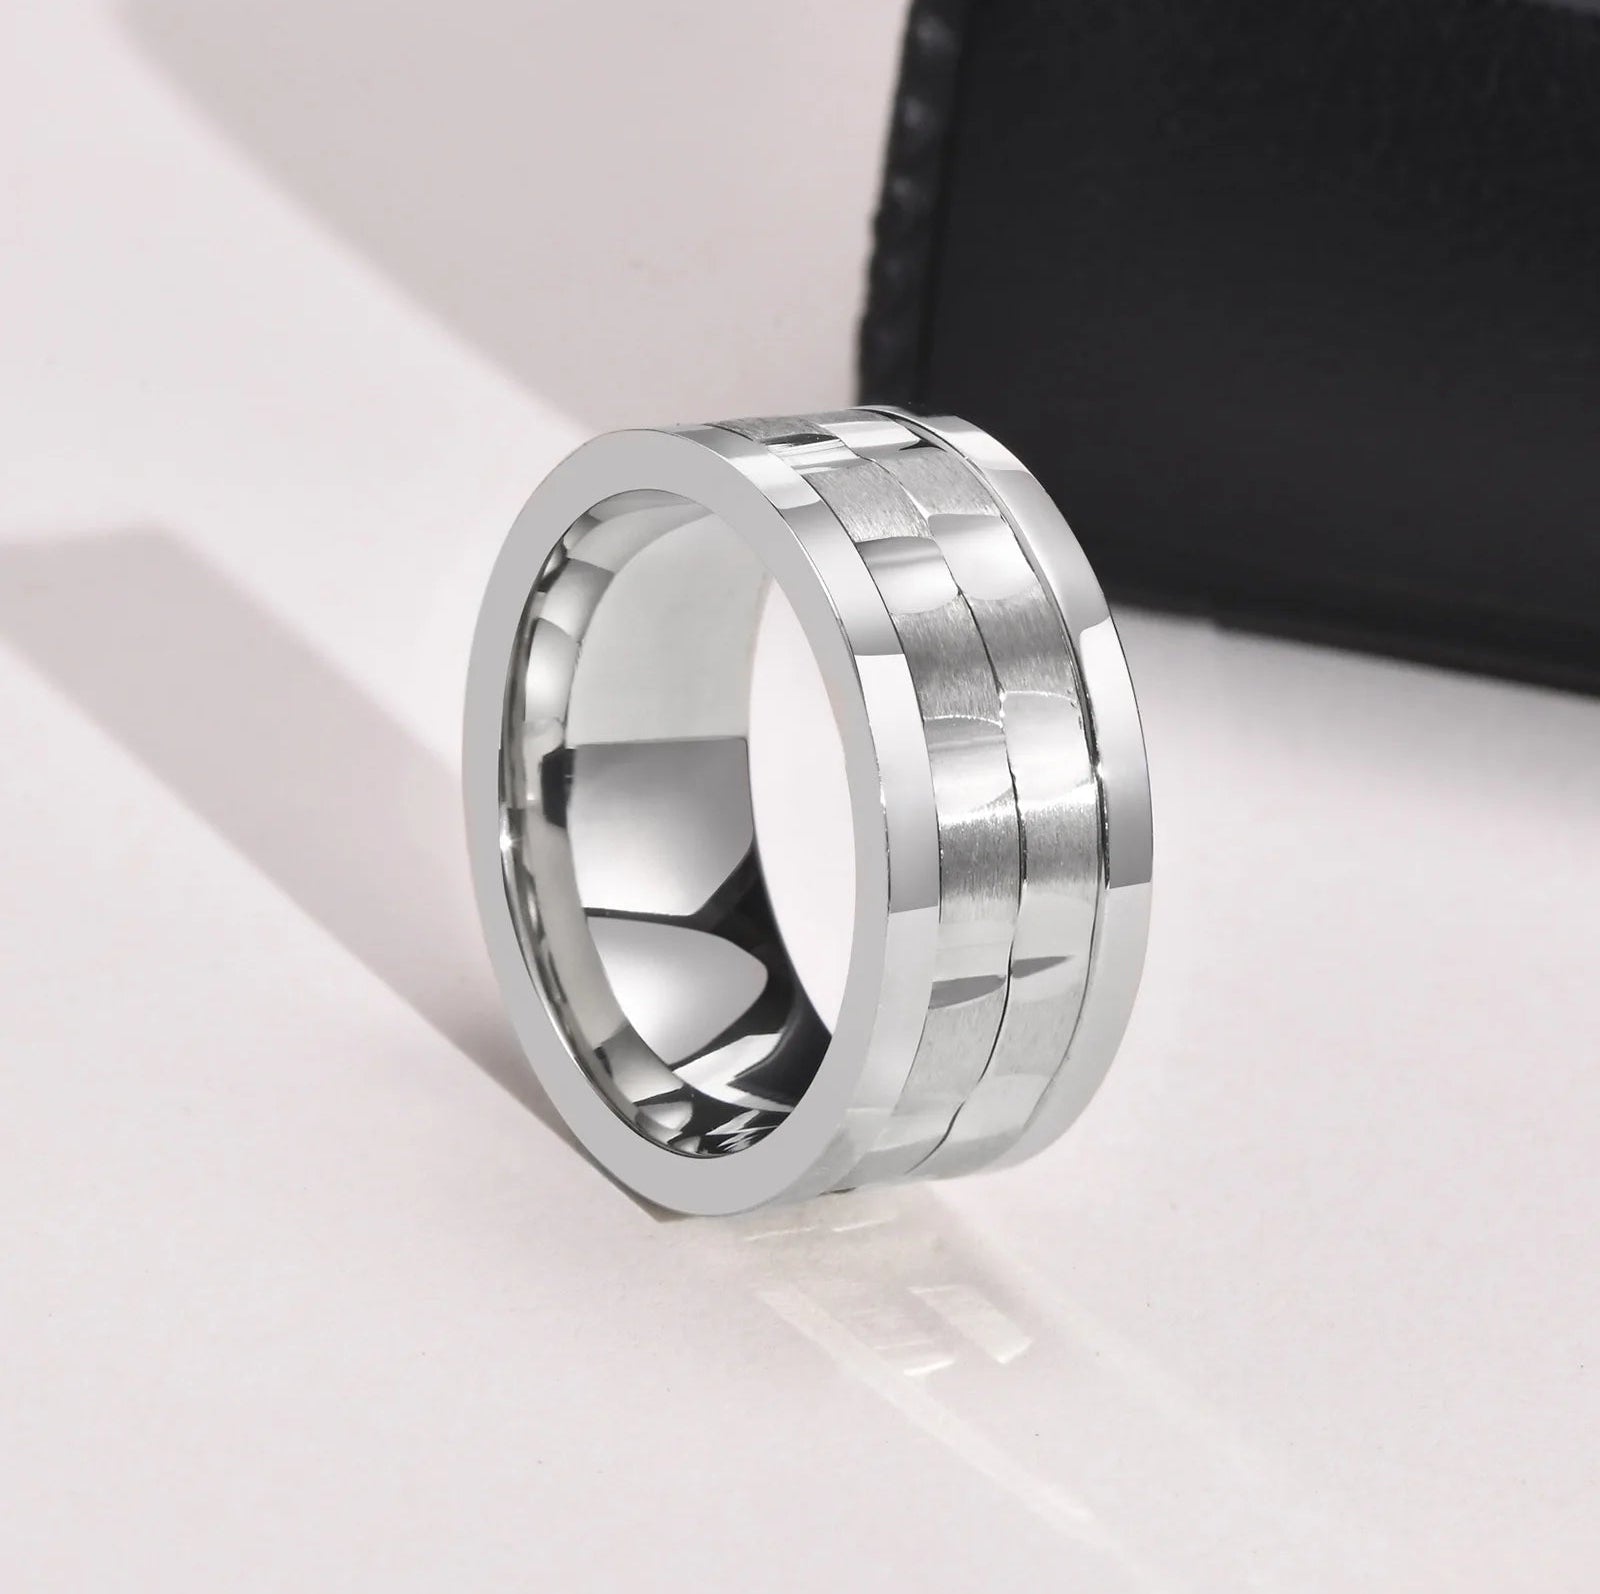 Beveled Steel Spinner Fidget Ring The Autistic Innovator 